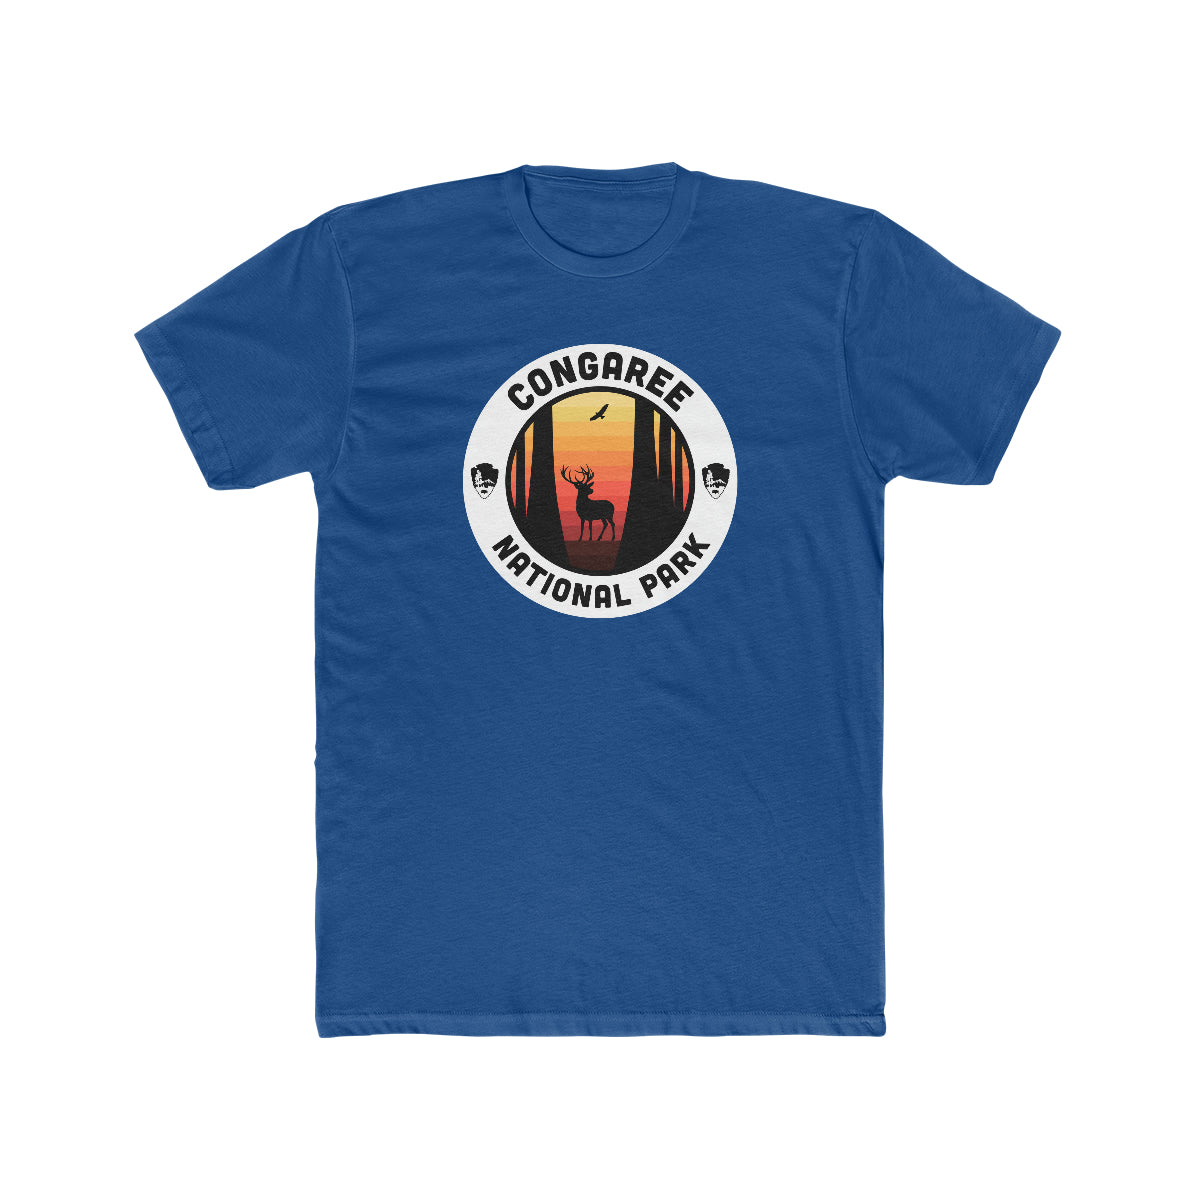 Congaree National Park T-Shirt - Round Badge Design